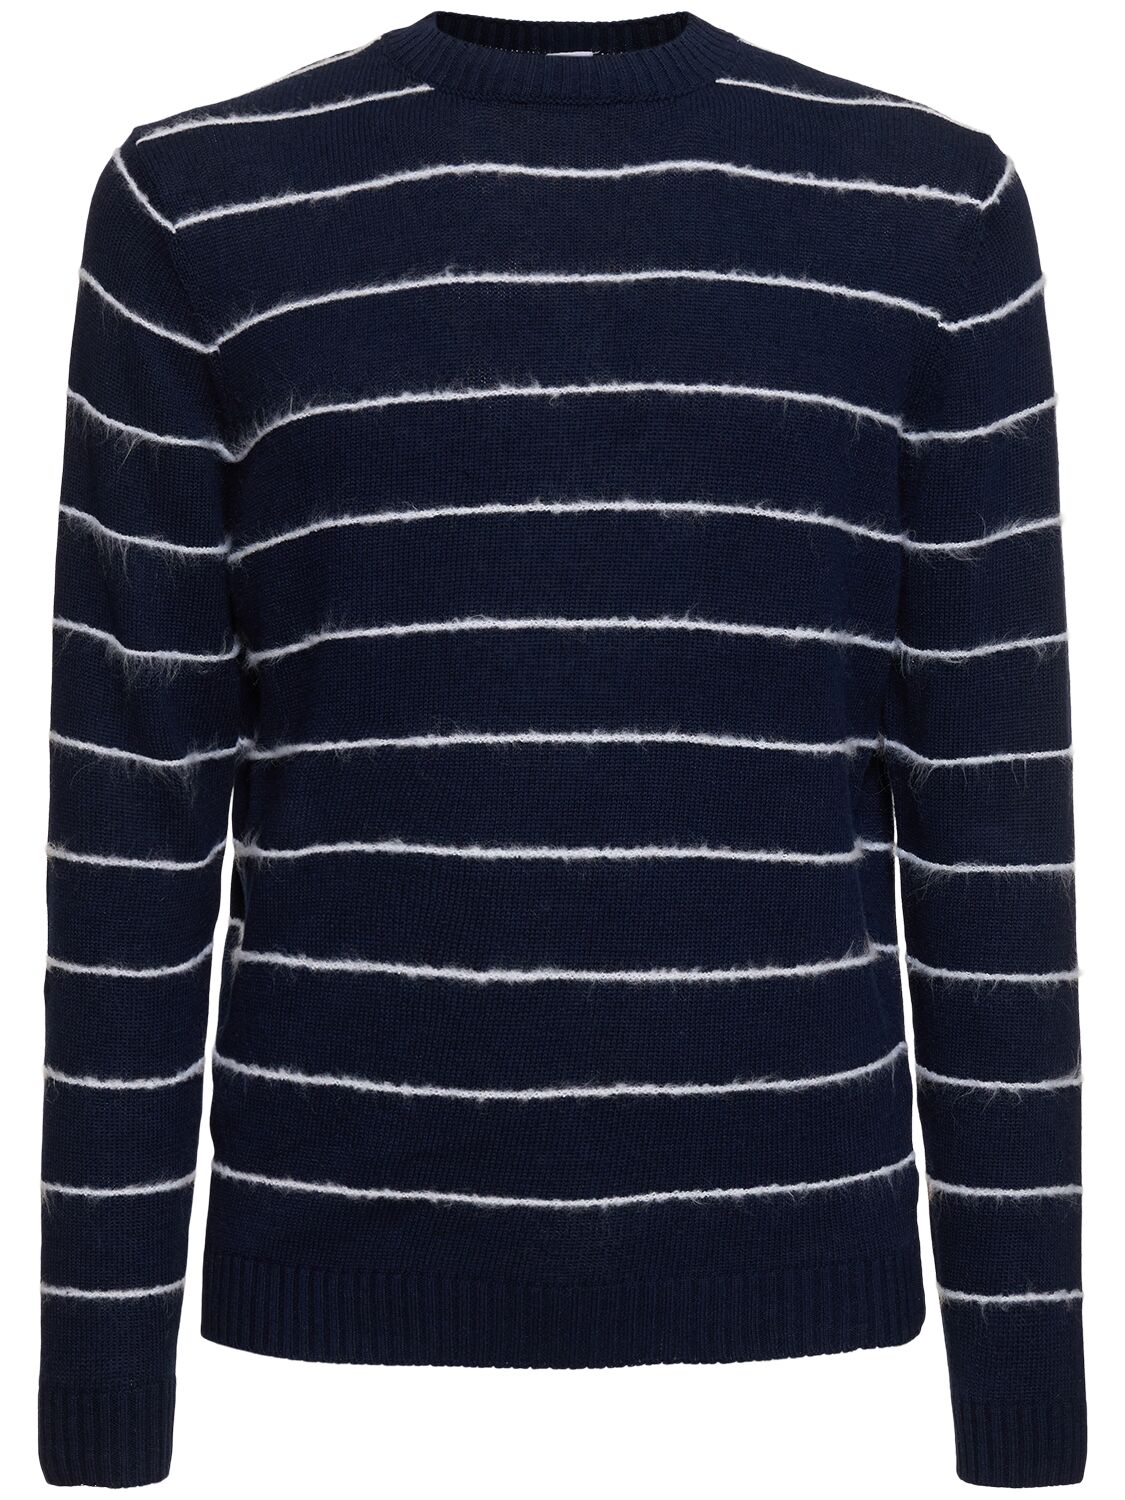 Image of Cotton Blend Knit Crewneck Sweater